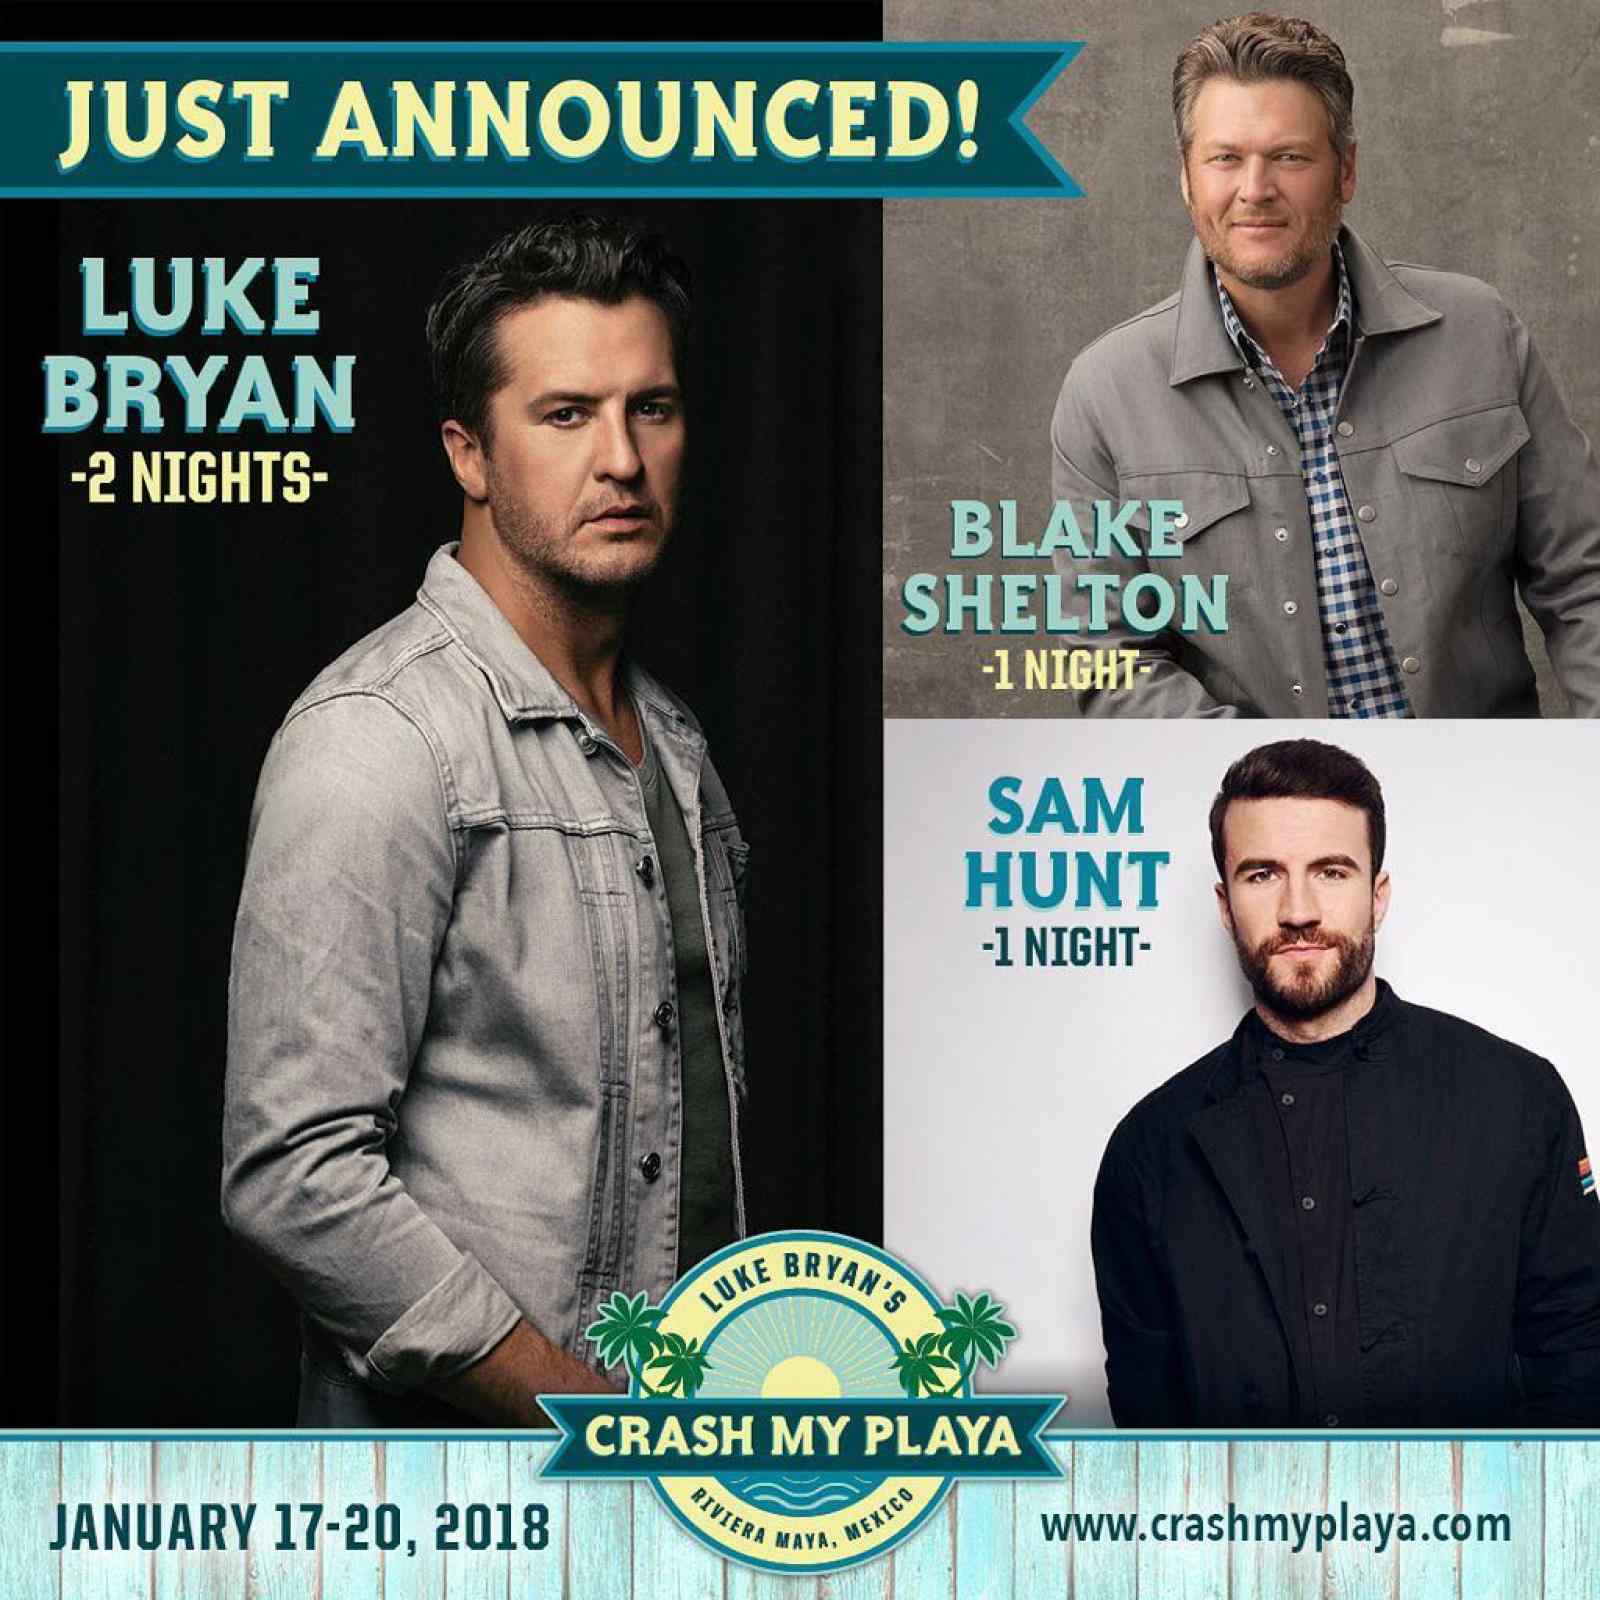 Luke Bryan's Crash My Playa Destination Event Welcomes Blake Shelton and Sam Hunt as Headliners January 17-20, 2018